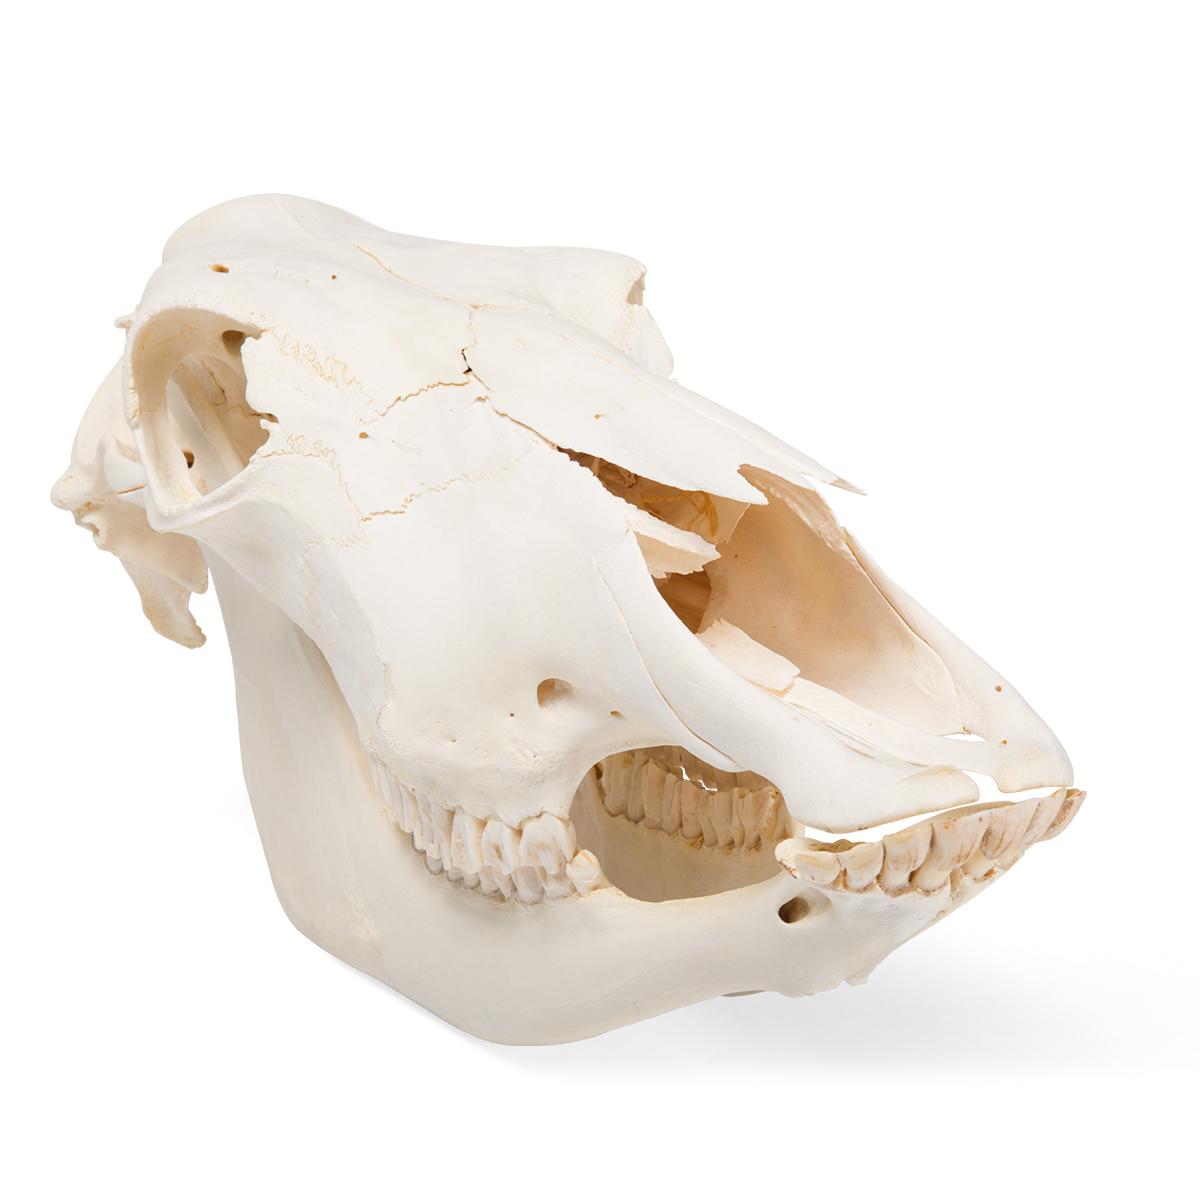 Bovine skull (Bos taurus), without horns, specimen - 1020977 - T300151w/o -  Farm Animals - 3B Scientific